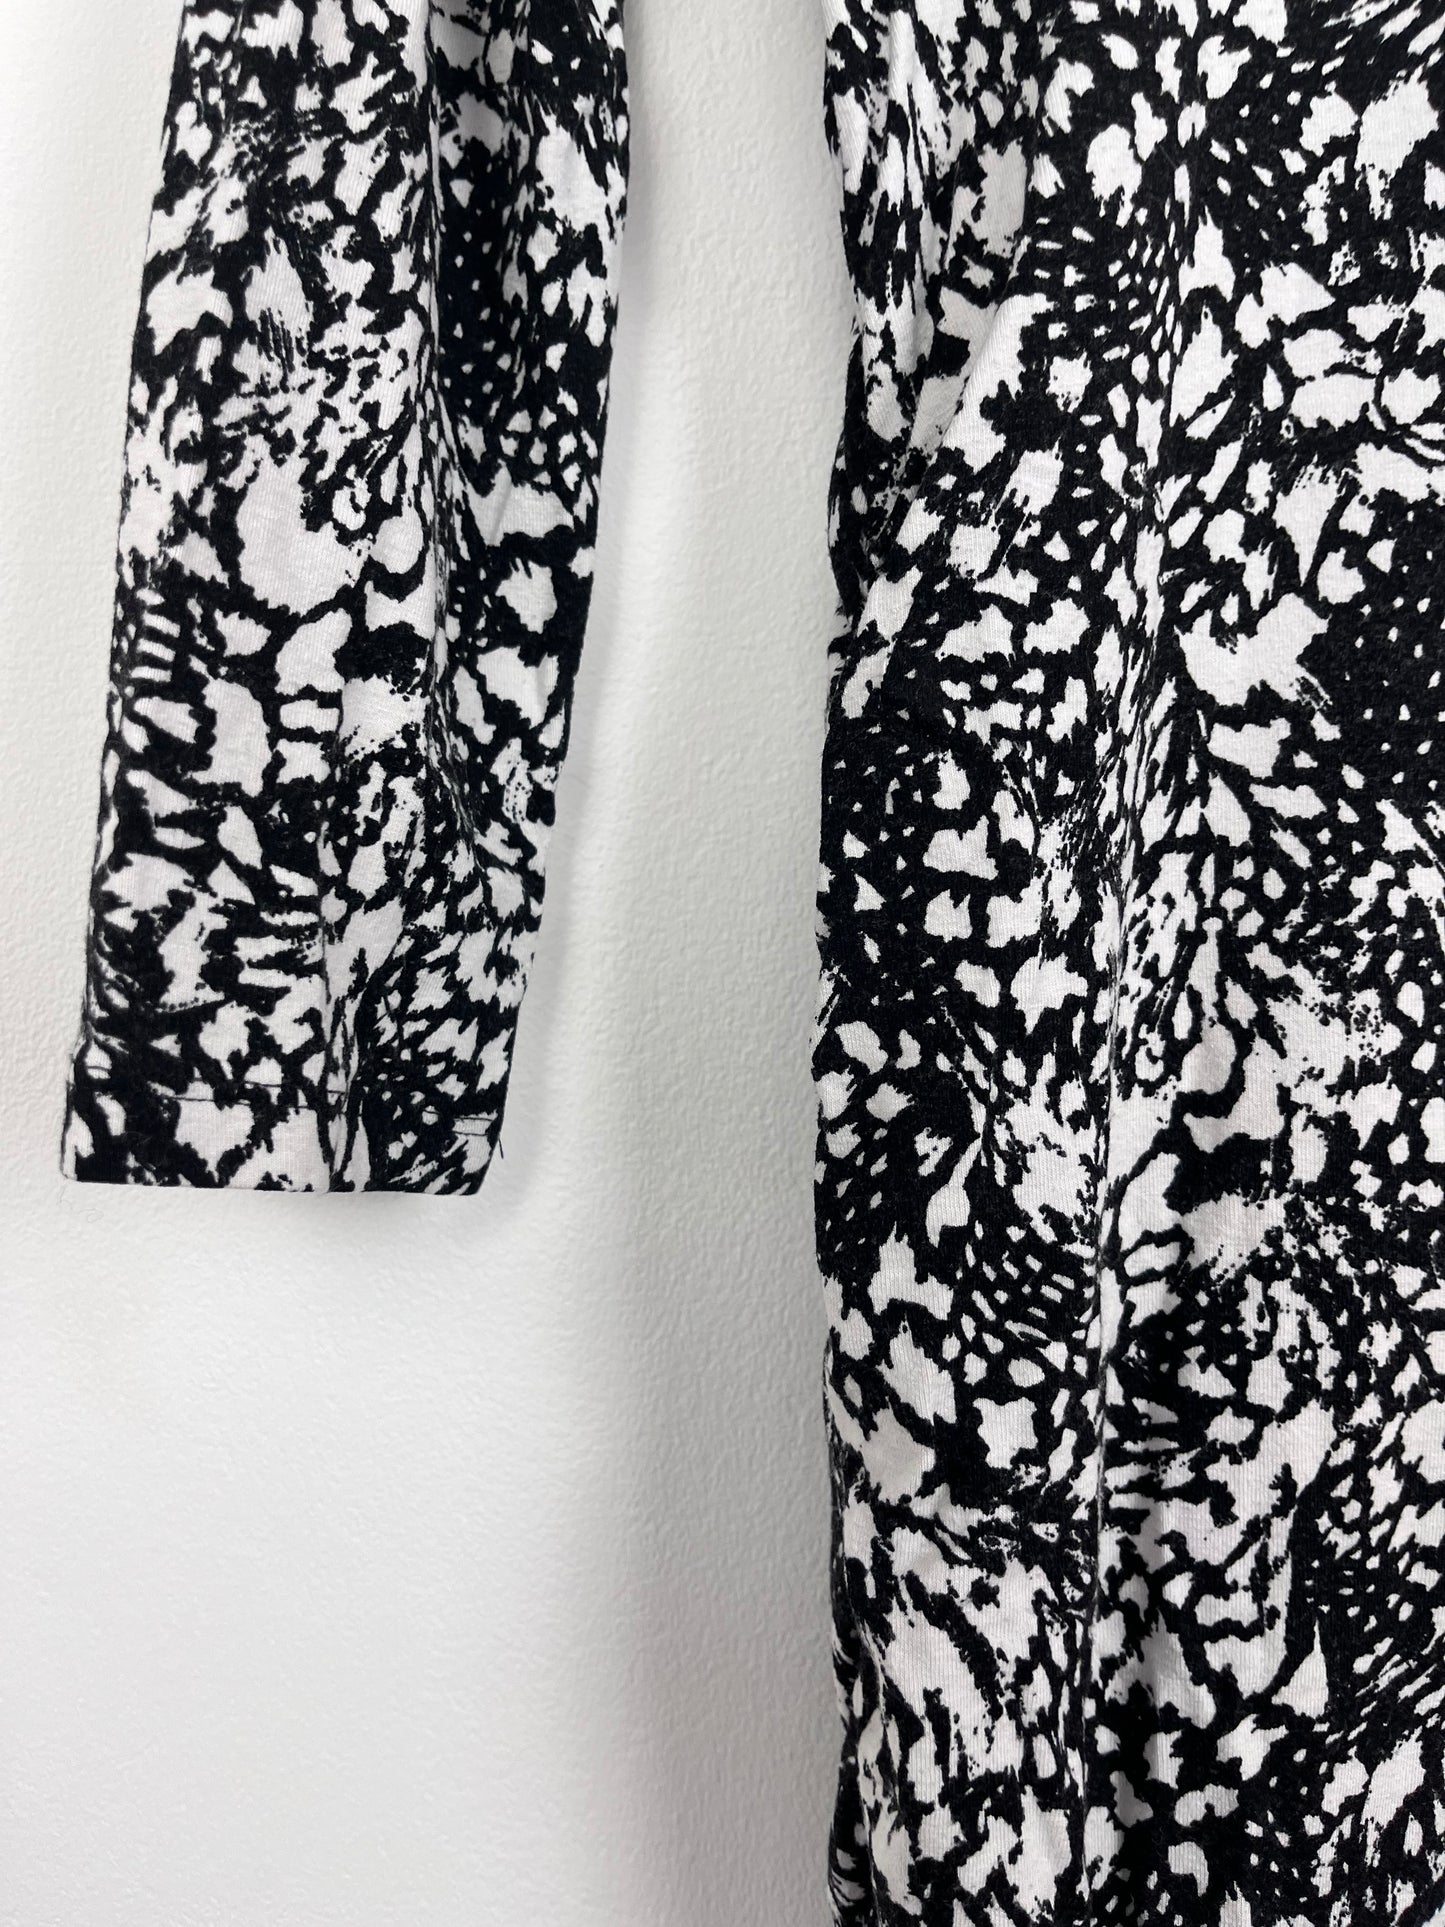 H&M Mama Medium-Dresses-Second Snuggle Preloved